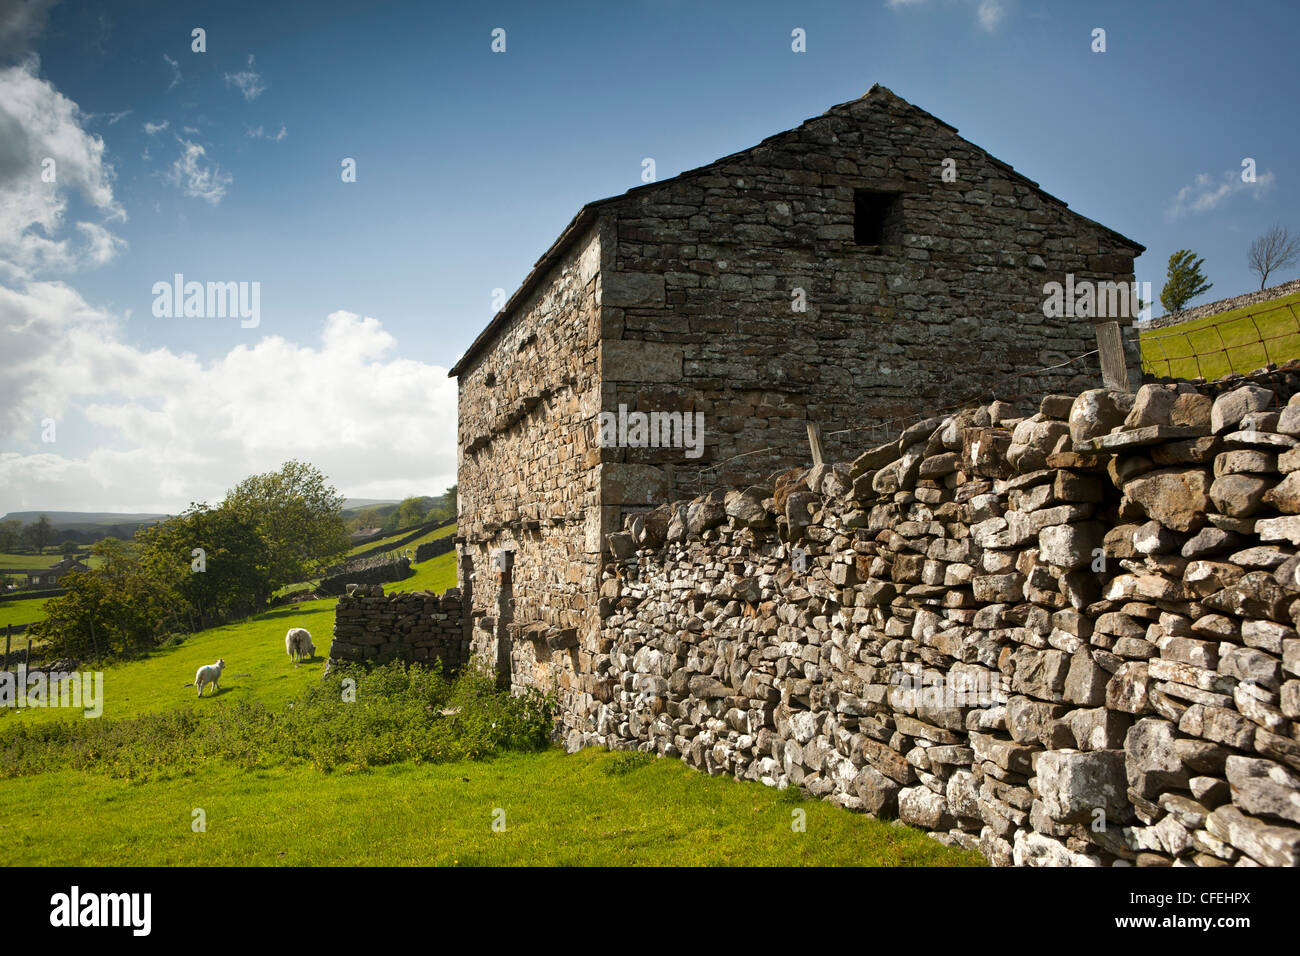 UK, England, Yorkshire, Wensleydale, Askrigg, stone field barn Stock Photo